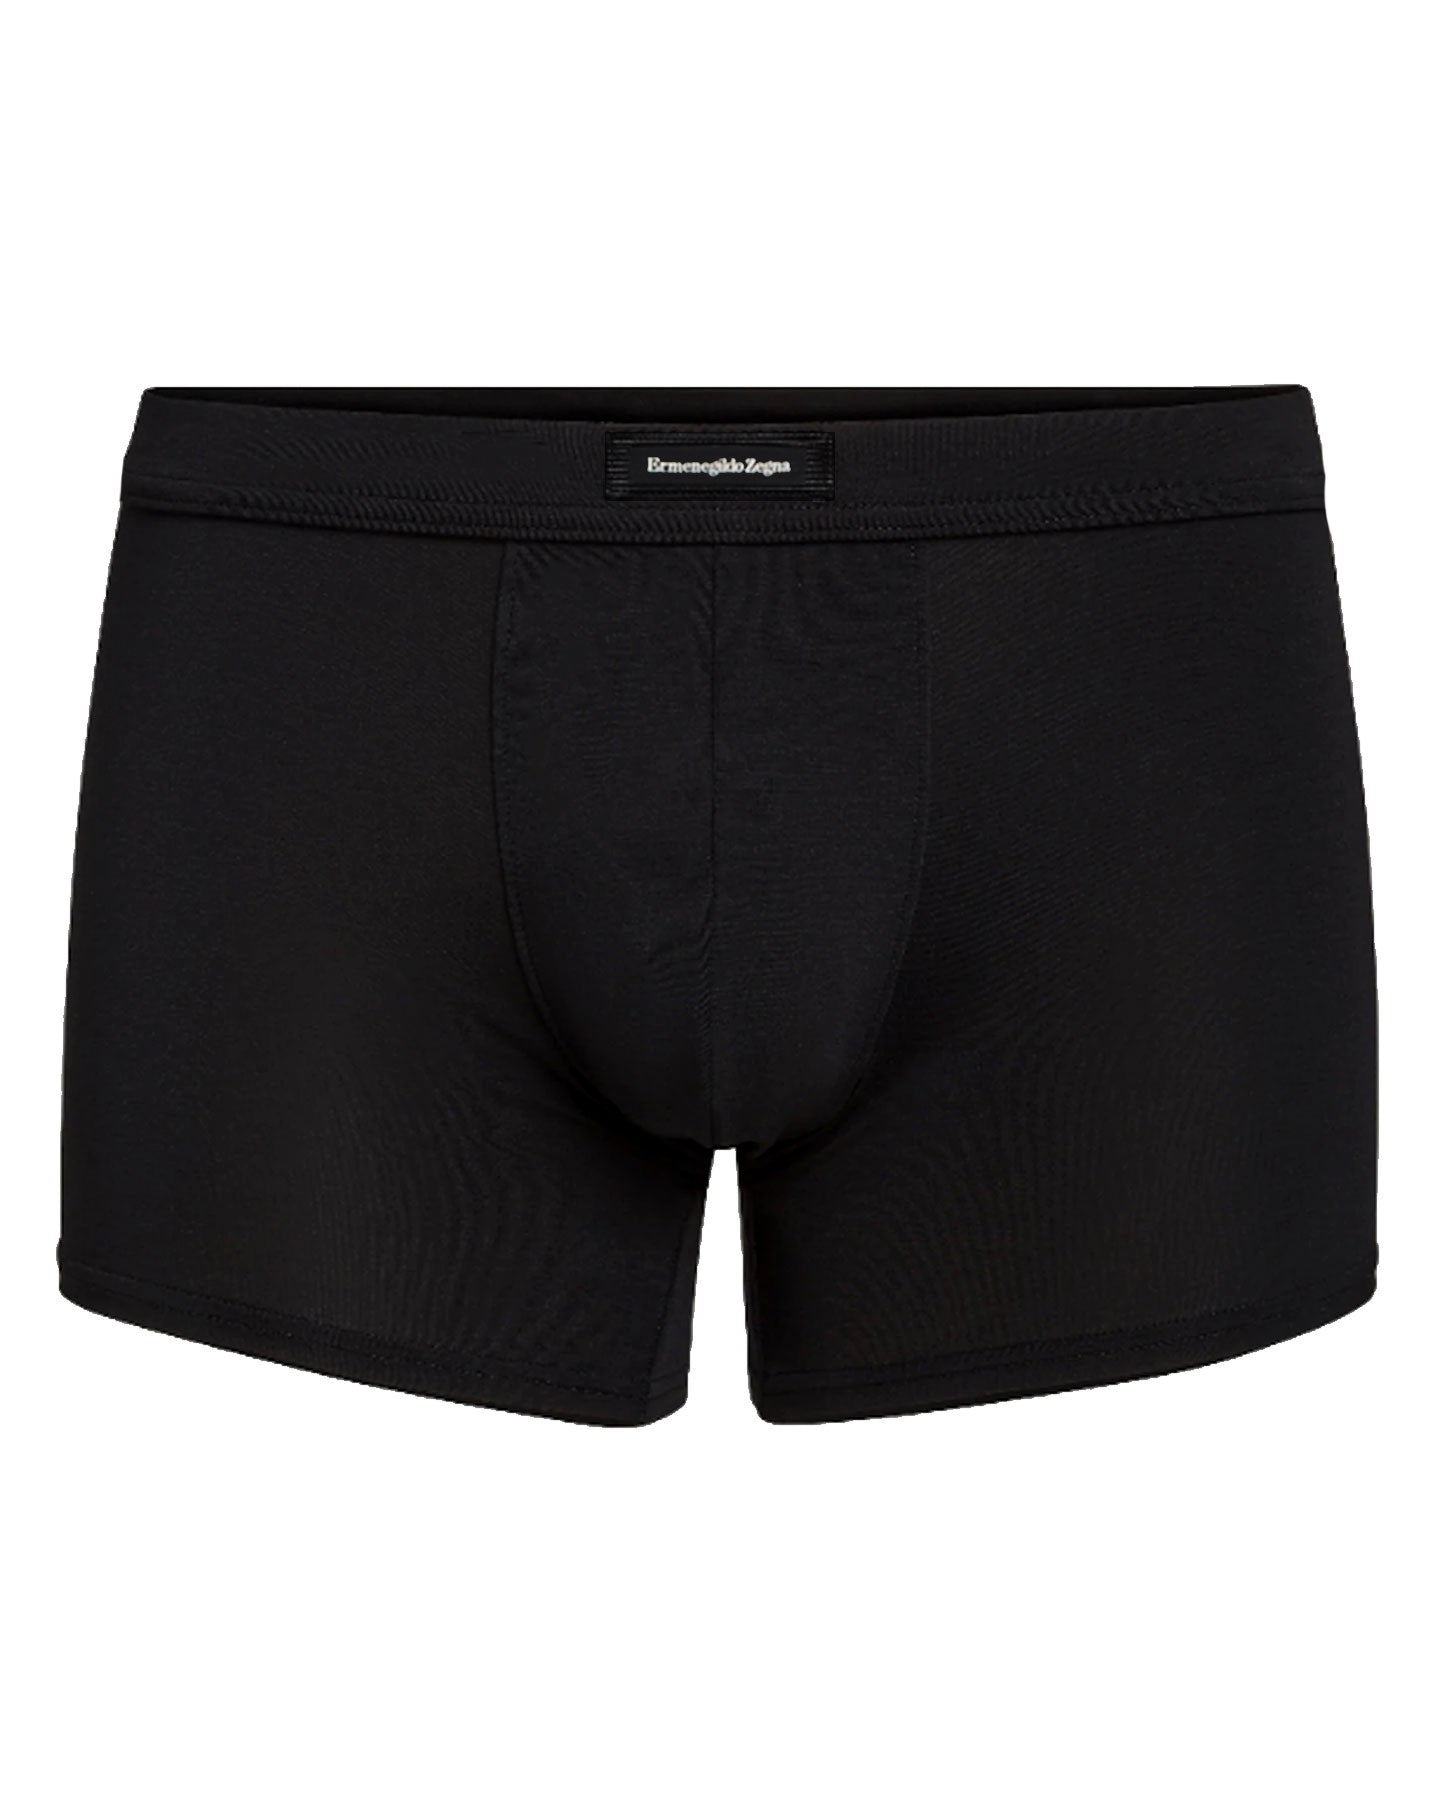 Ermenegildo Zegna Boxer Brief Black Men Underwear MicroModal XXL - Tie Deals